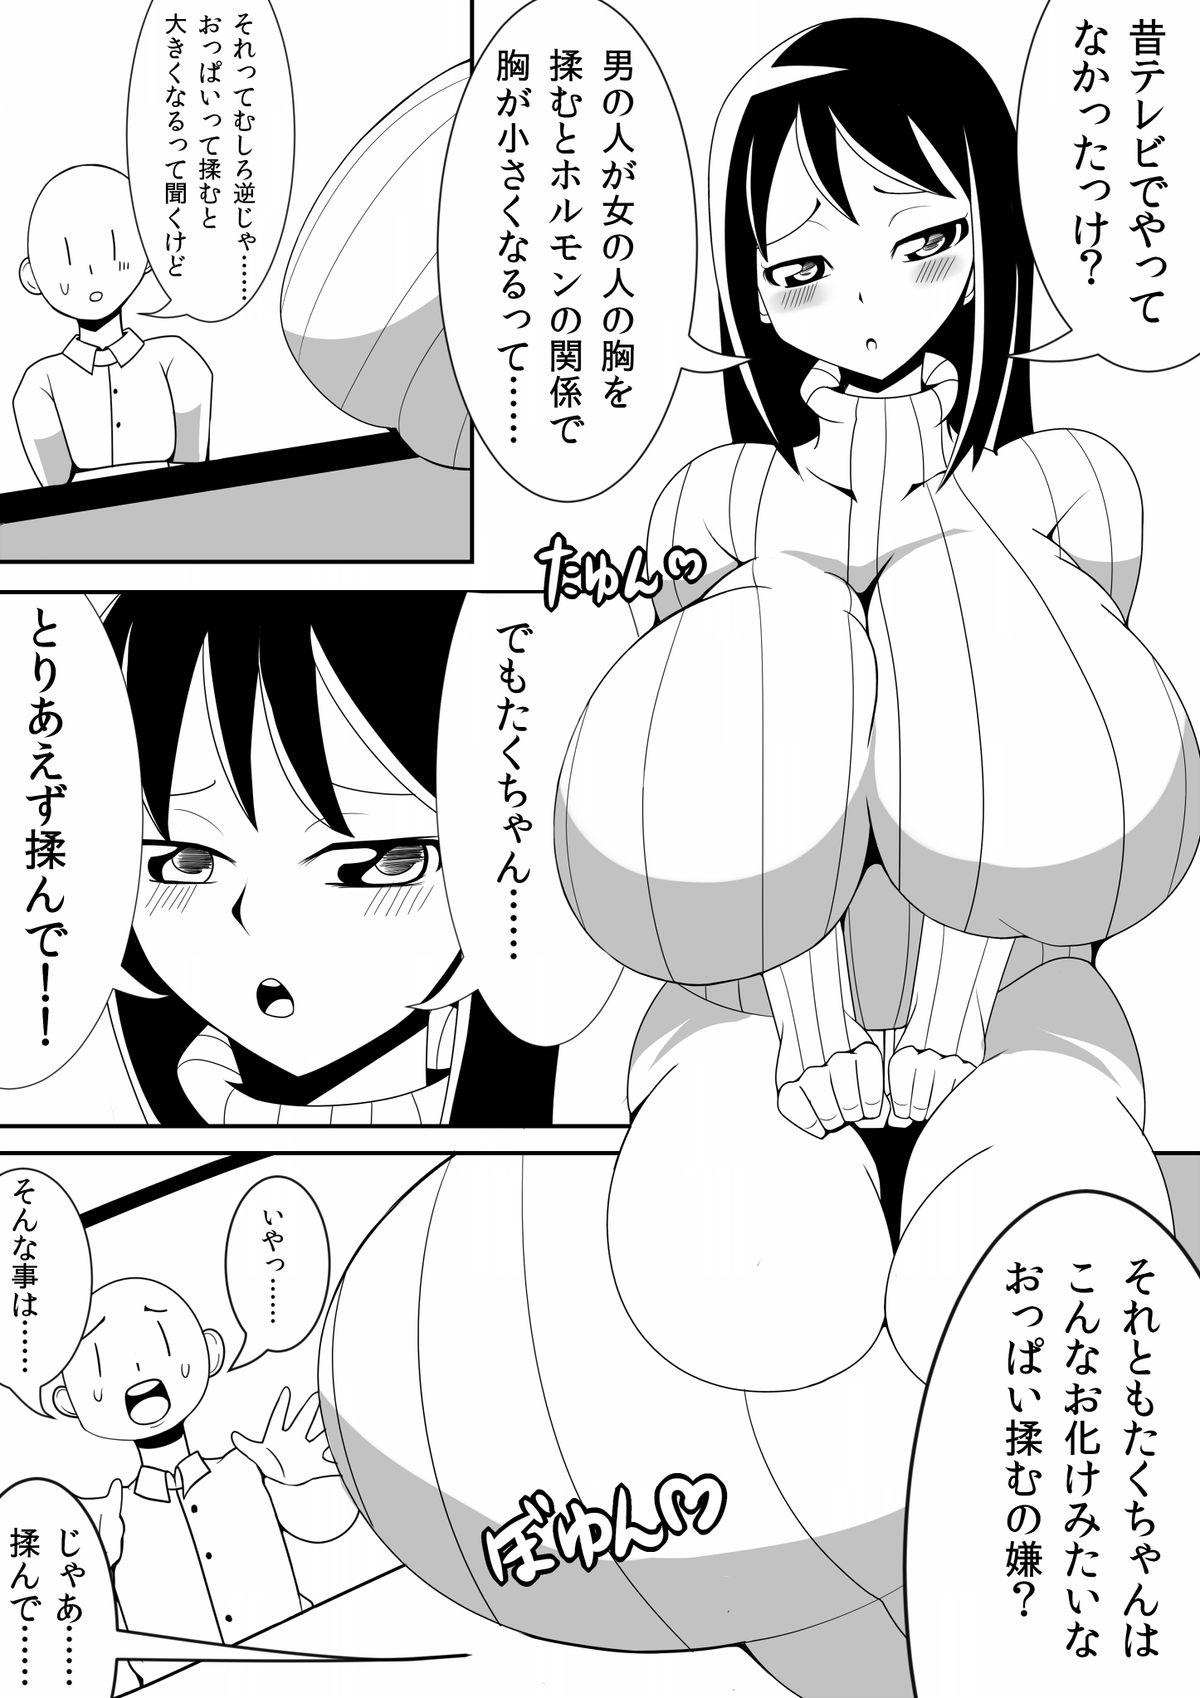 Teensex Asaokitara Oppai Konnani ga Okkiku Nacchatta Masturbating - Page 5